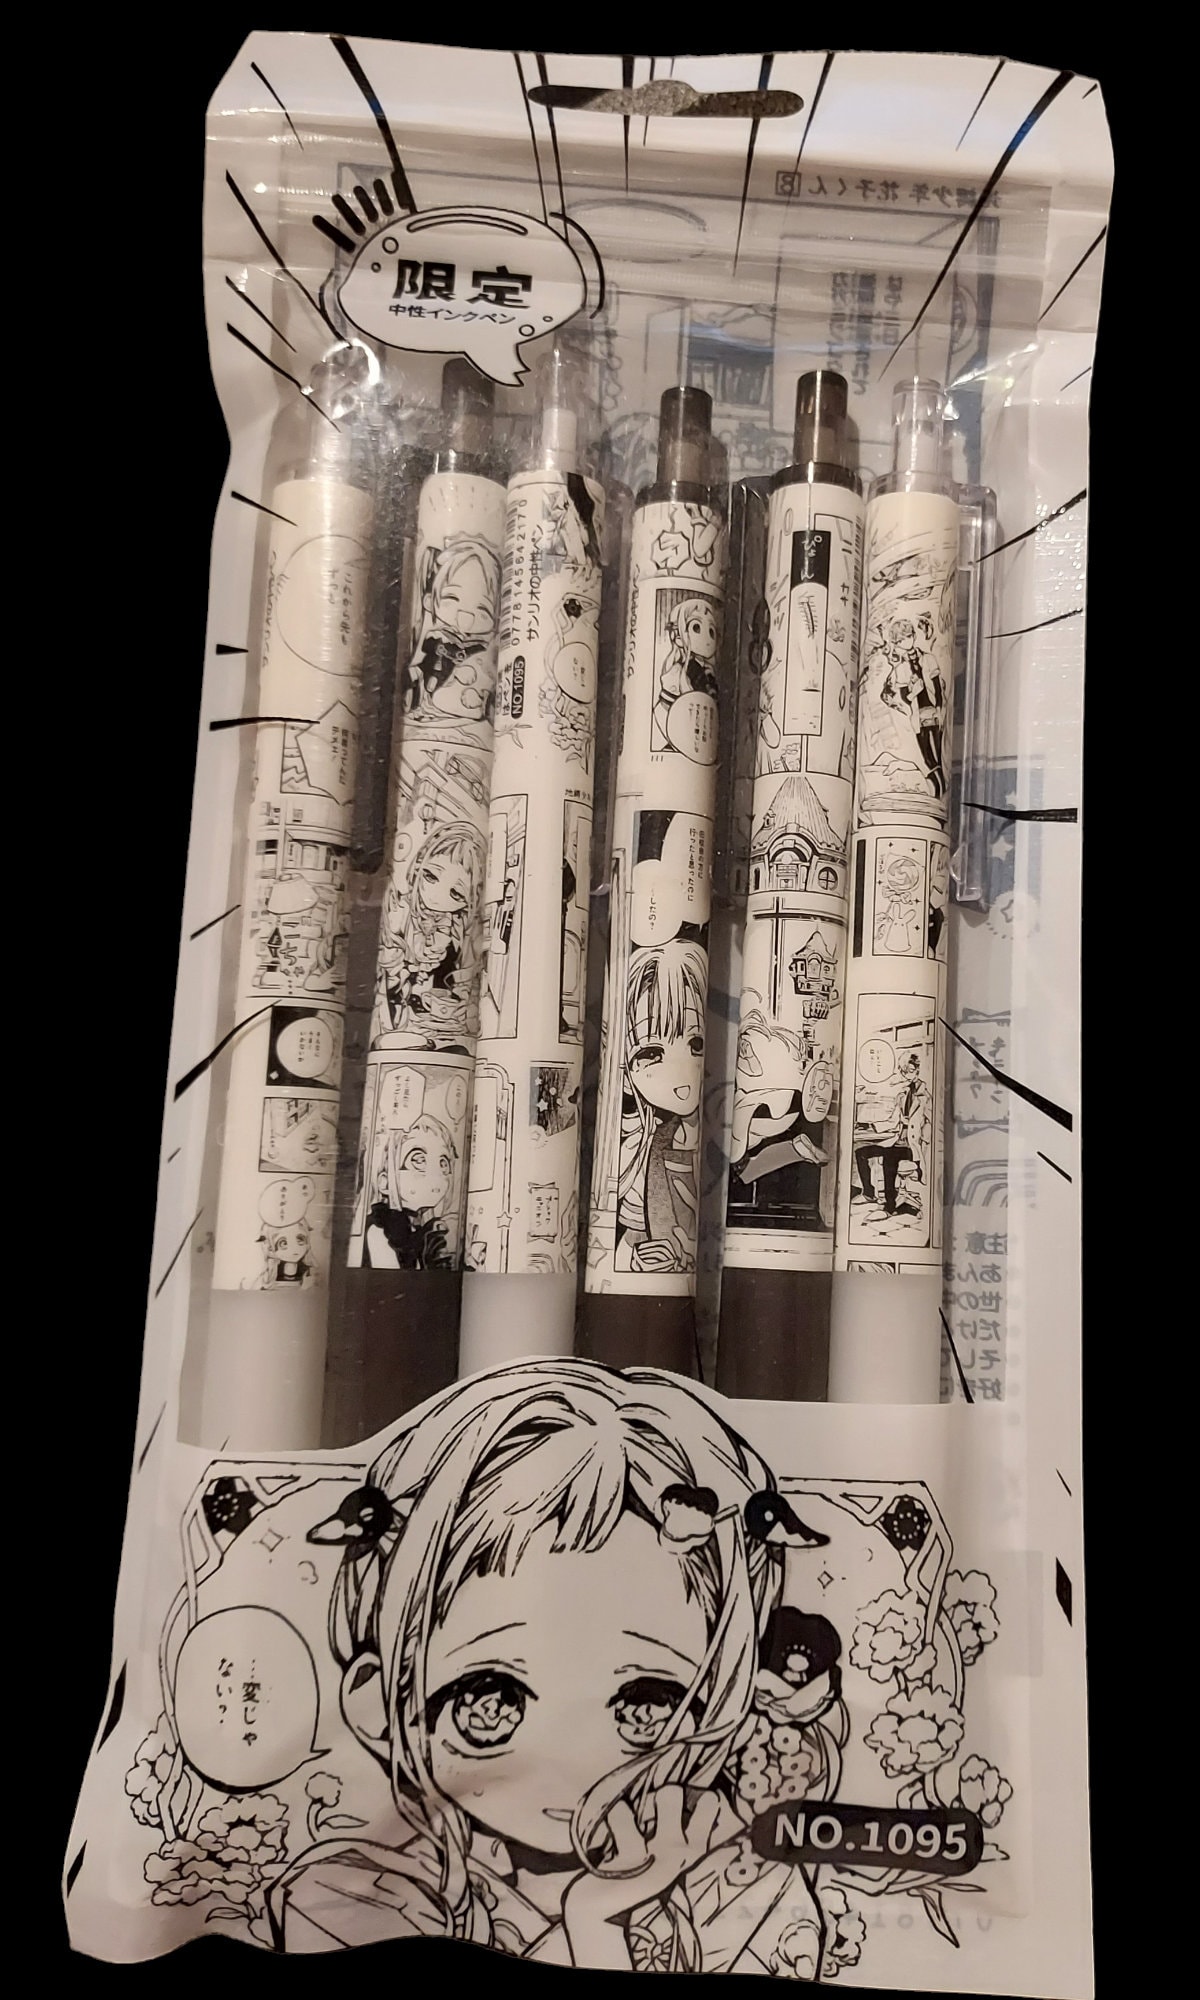 Professional Black Fineliner Pens, Ink Drawing Pens - Set of 9 Waterproof  Micro-line Pen for Manga, Outline, Illustration, Drafting, Sketching, Hand  Lettering: Buy Online at Best Price in UAE 